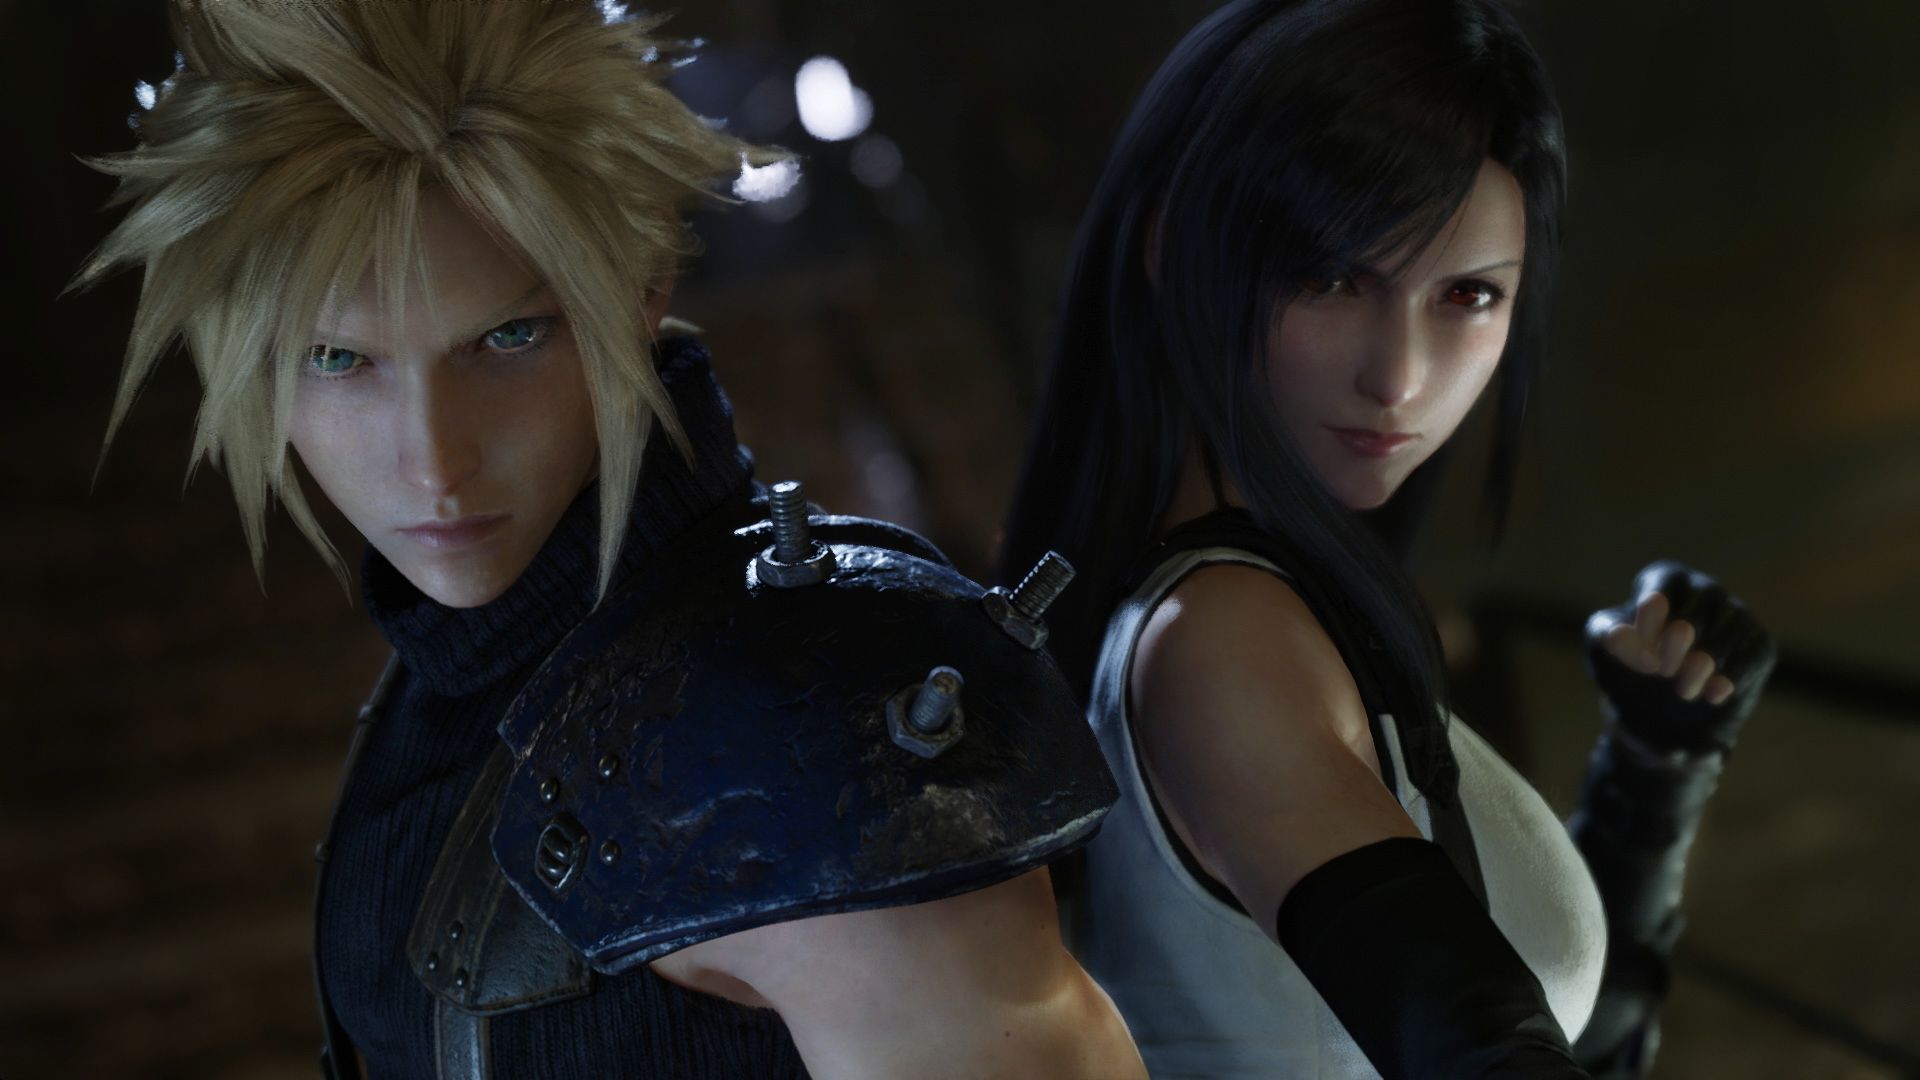 Final Fantasy 7 Remake's confusing ending explained - CNET